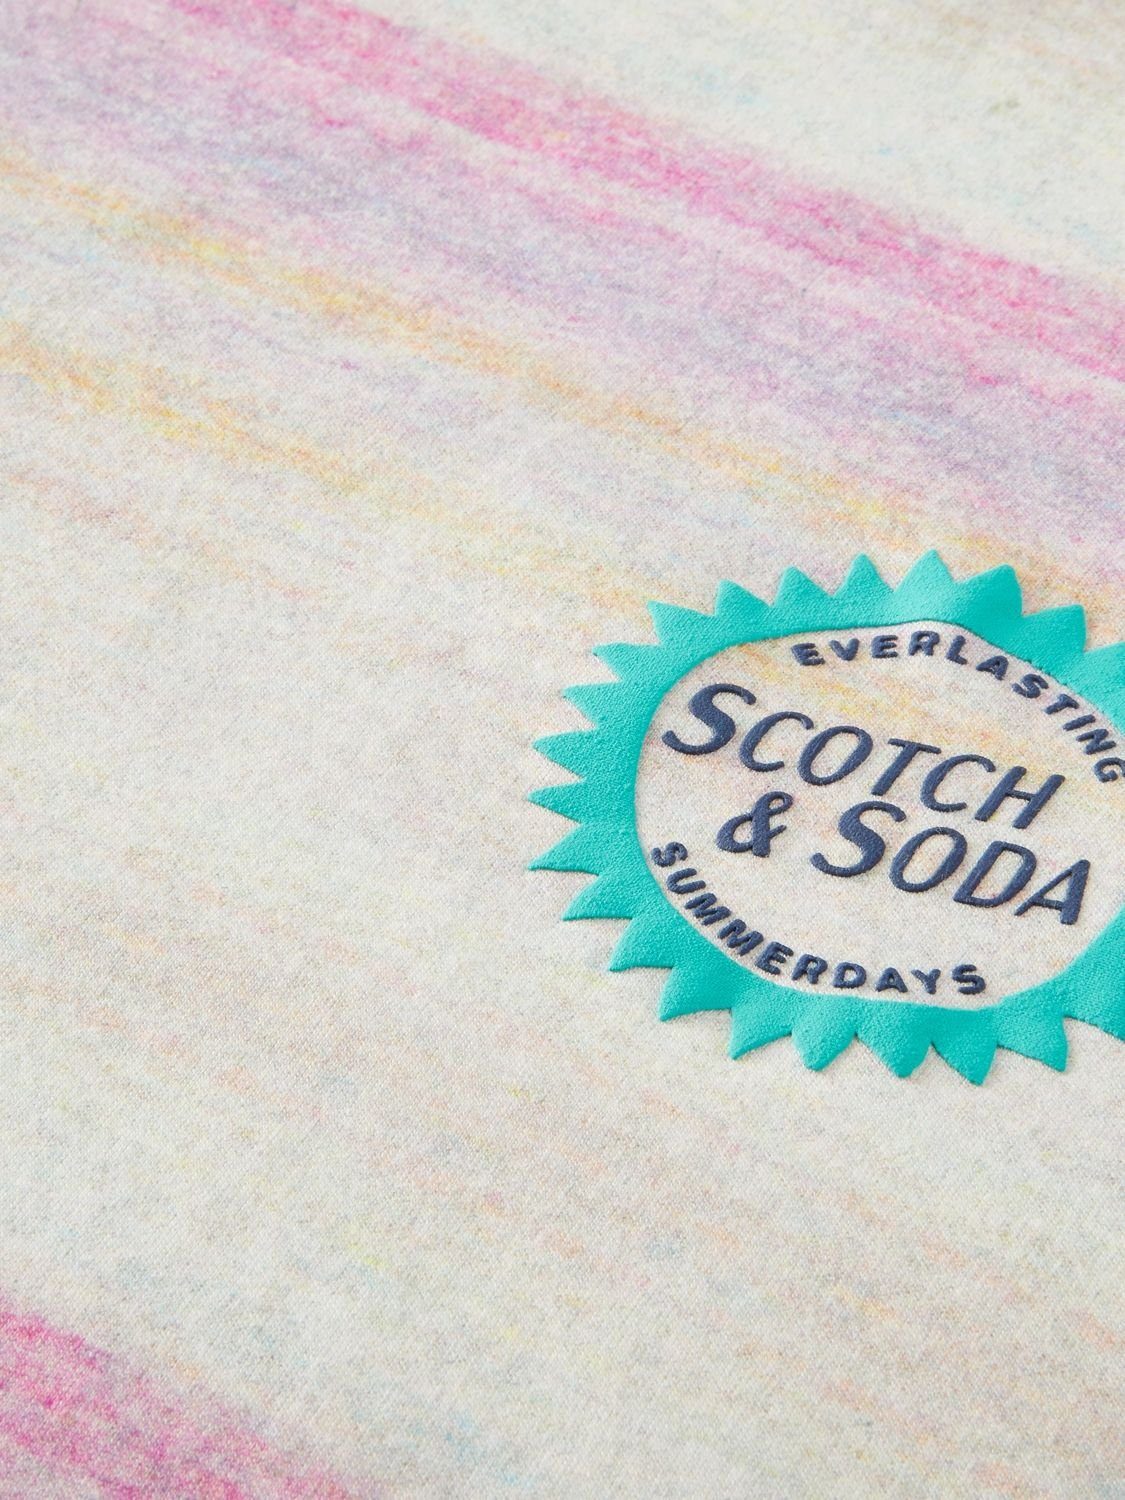 Scotch & T-Shirt Soda